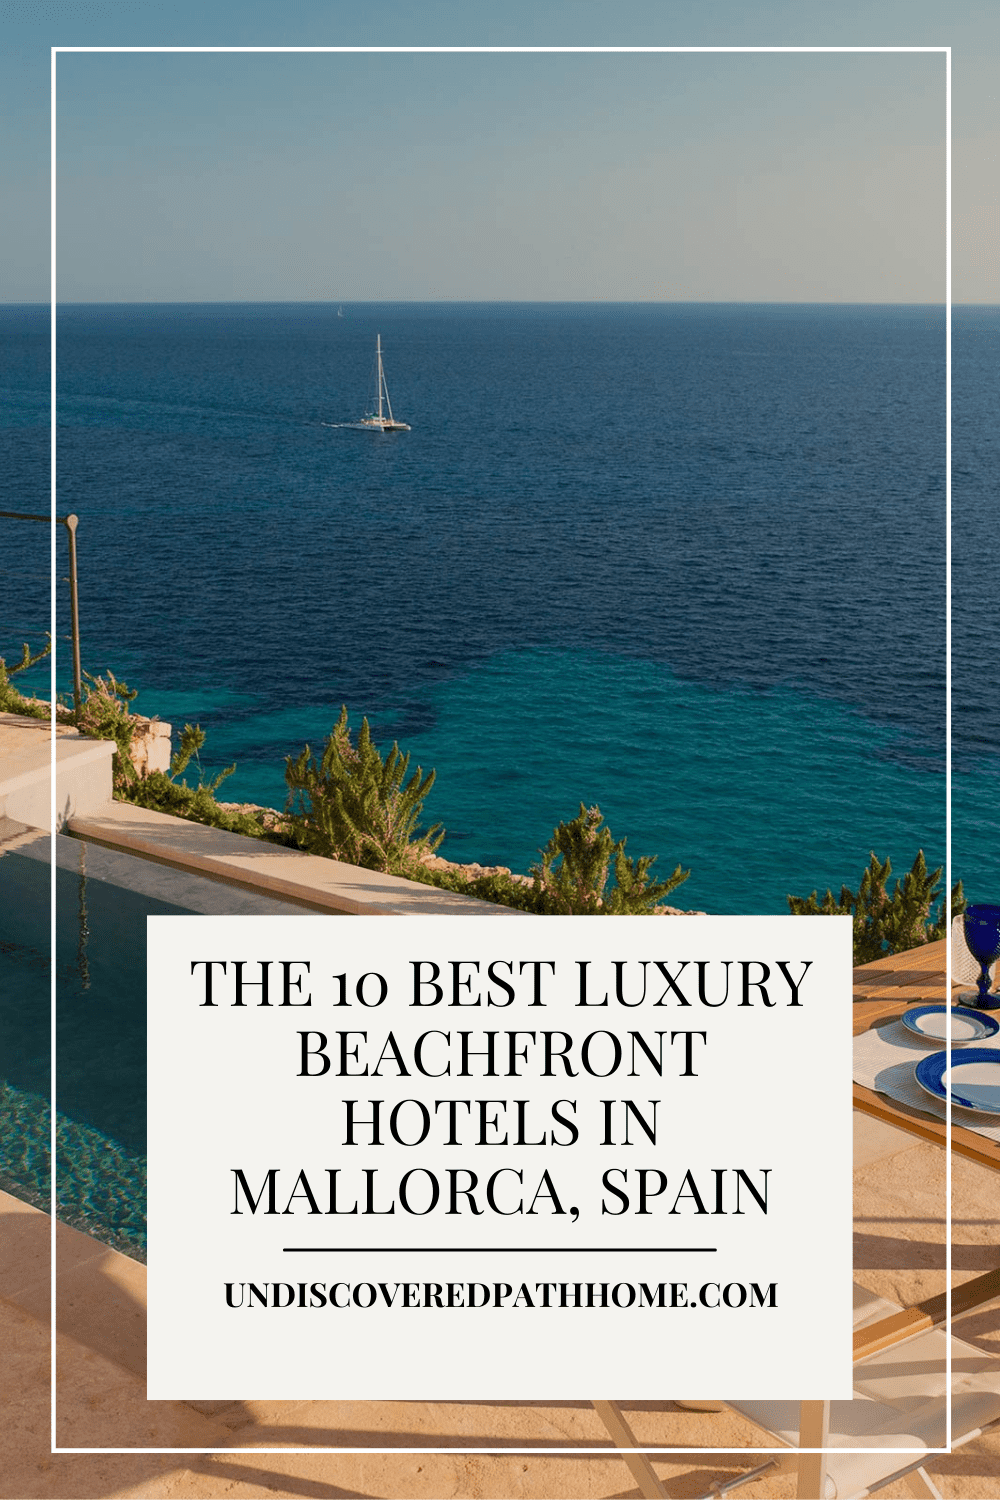 The 10 best beach hotels in Mallorca, Spain